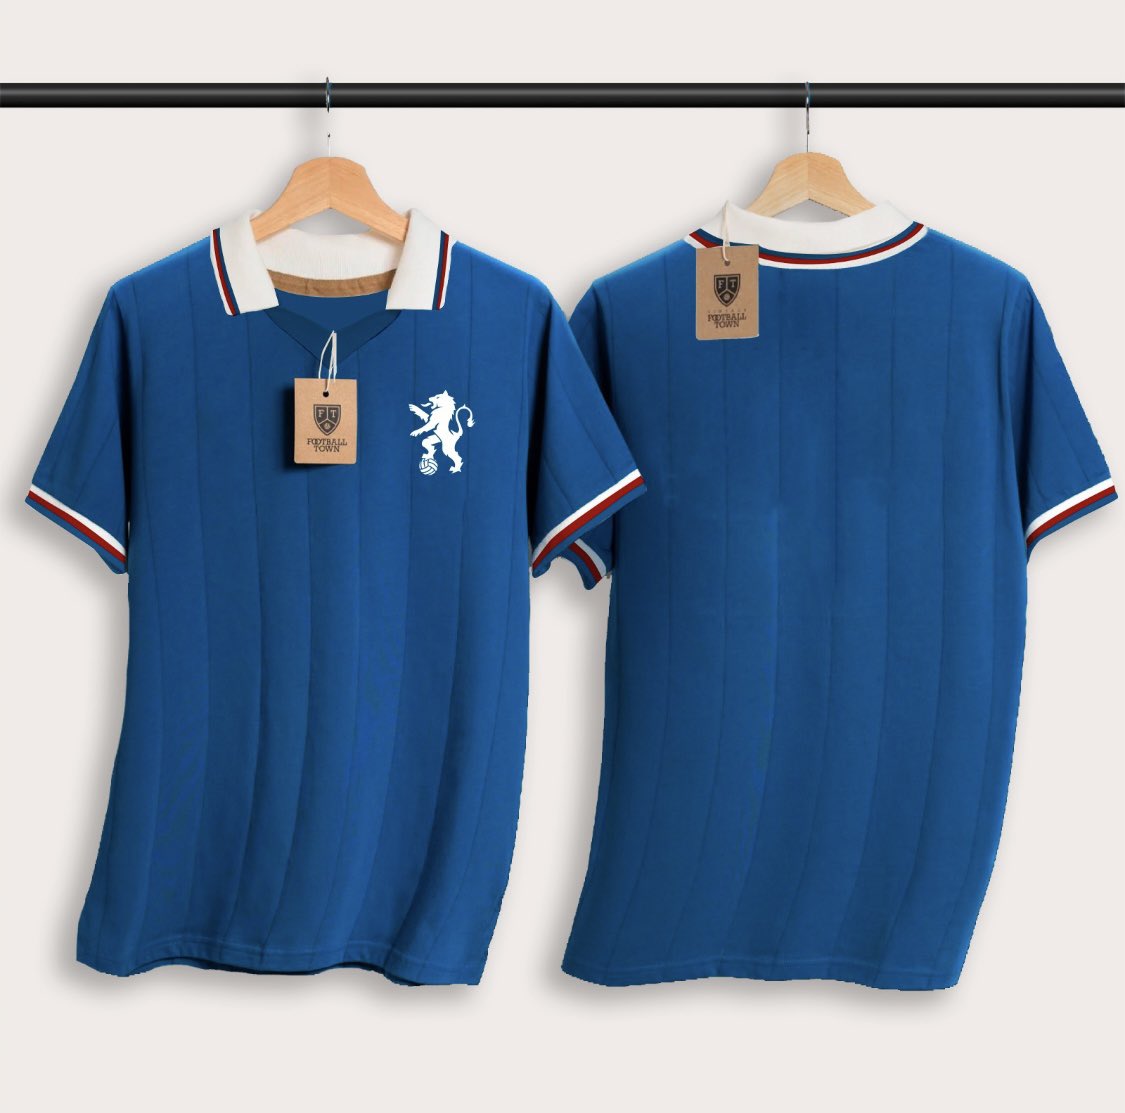 Custom Kits) Rangers Concept Kit with New Kit Sponsor [Reference